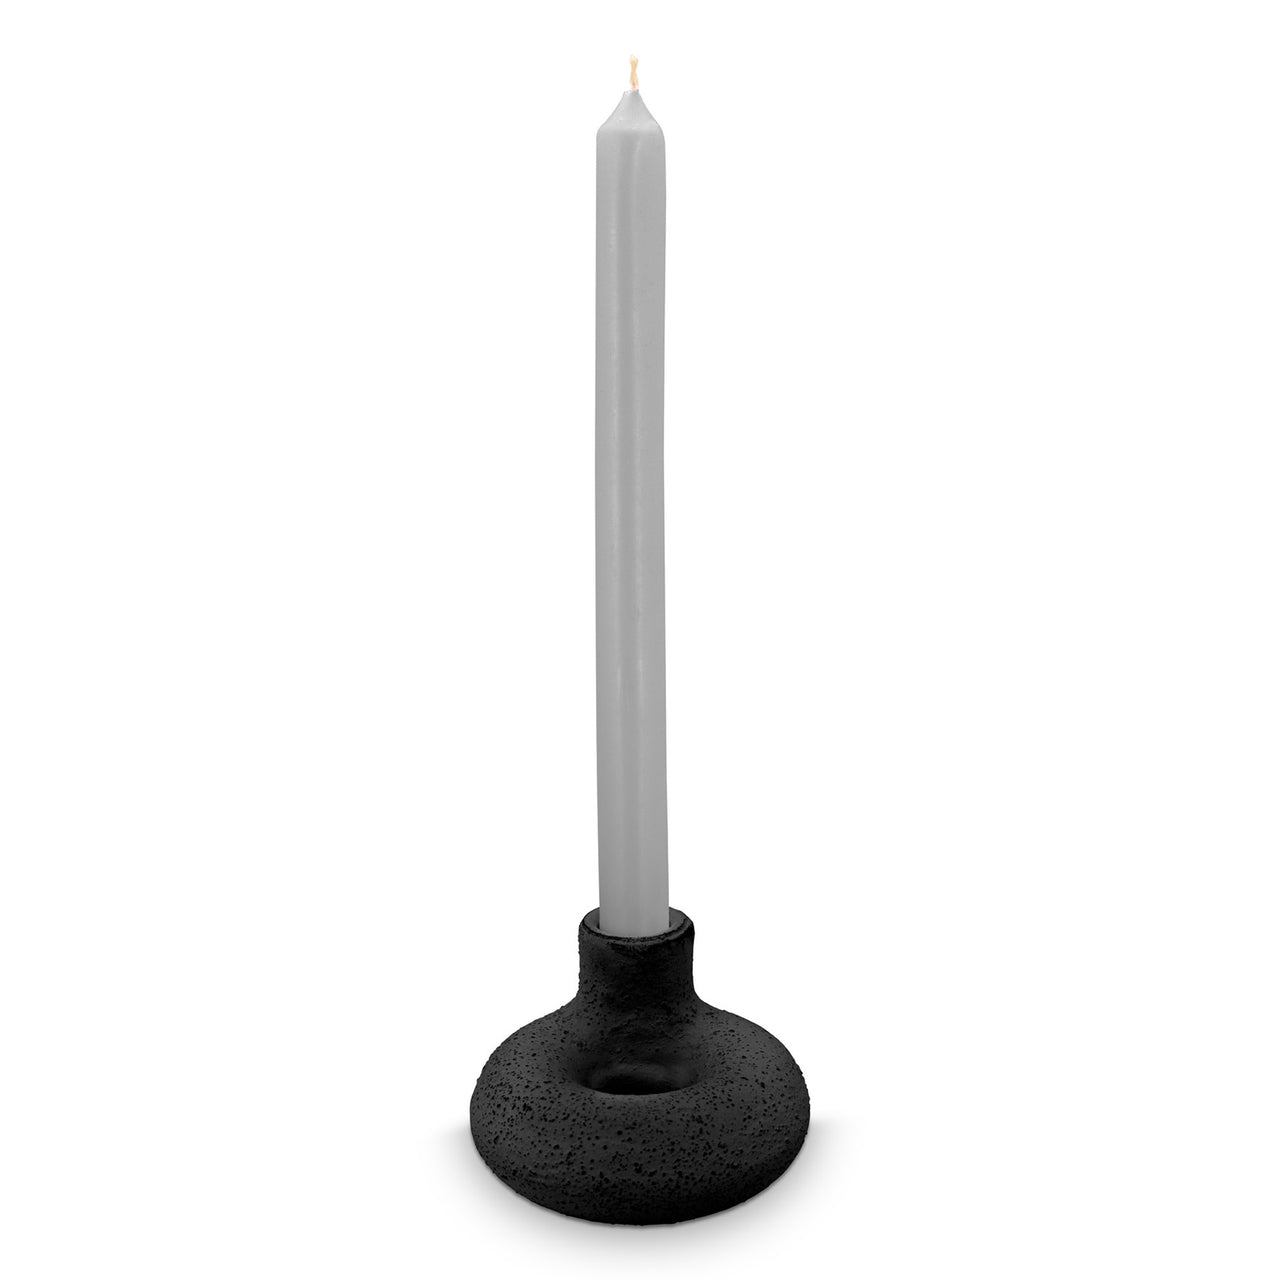 10cm Black Ecomix Candle Holder